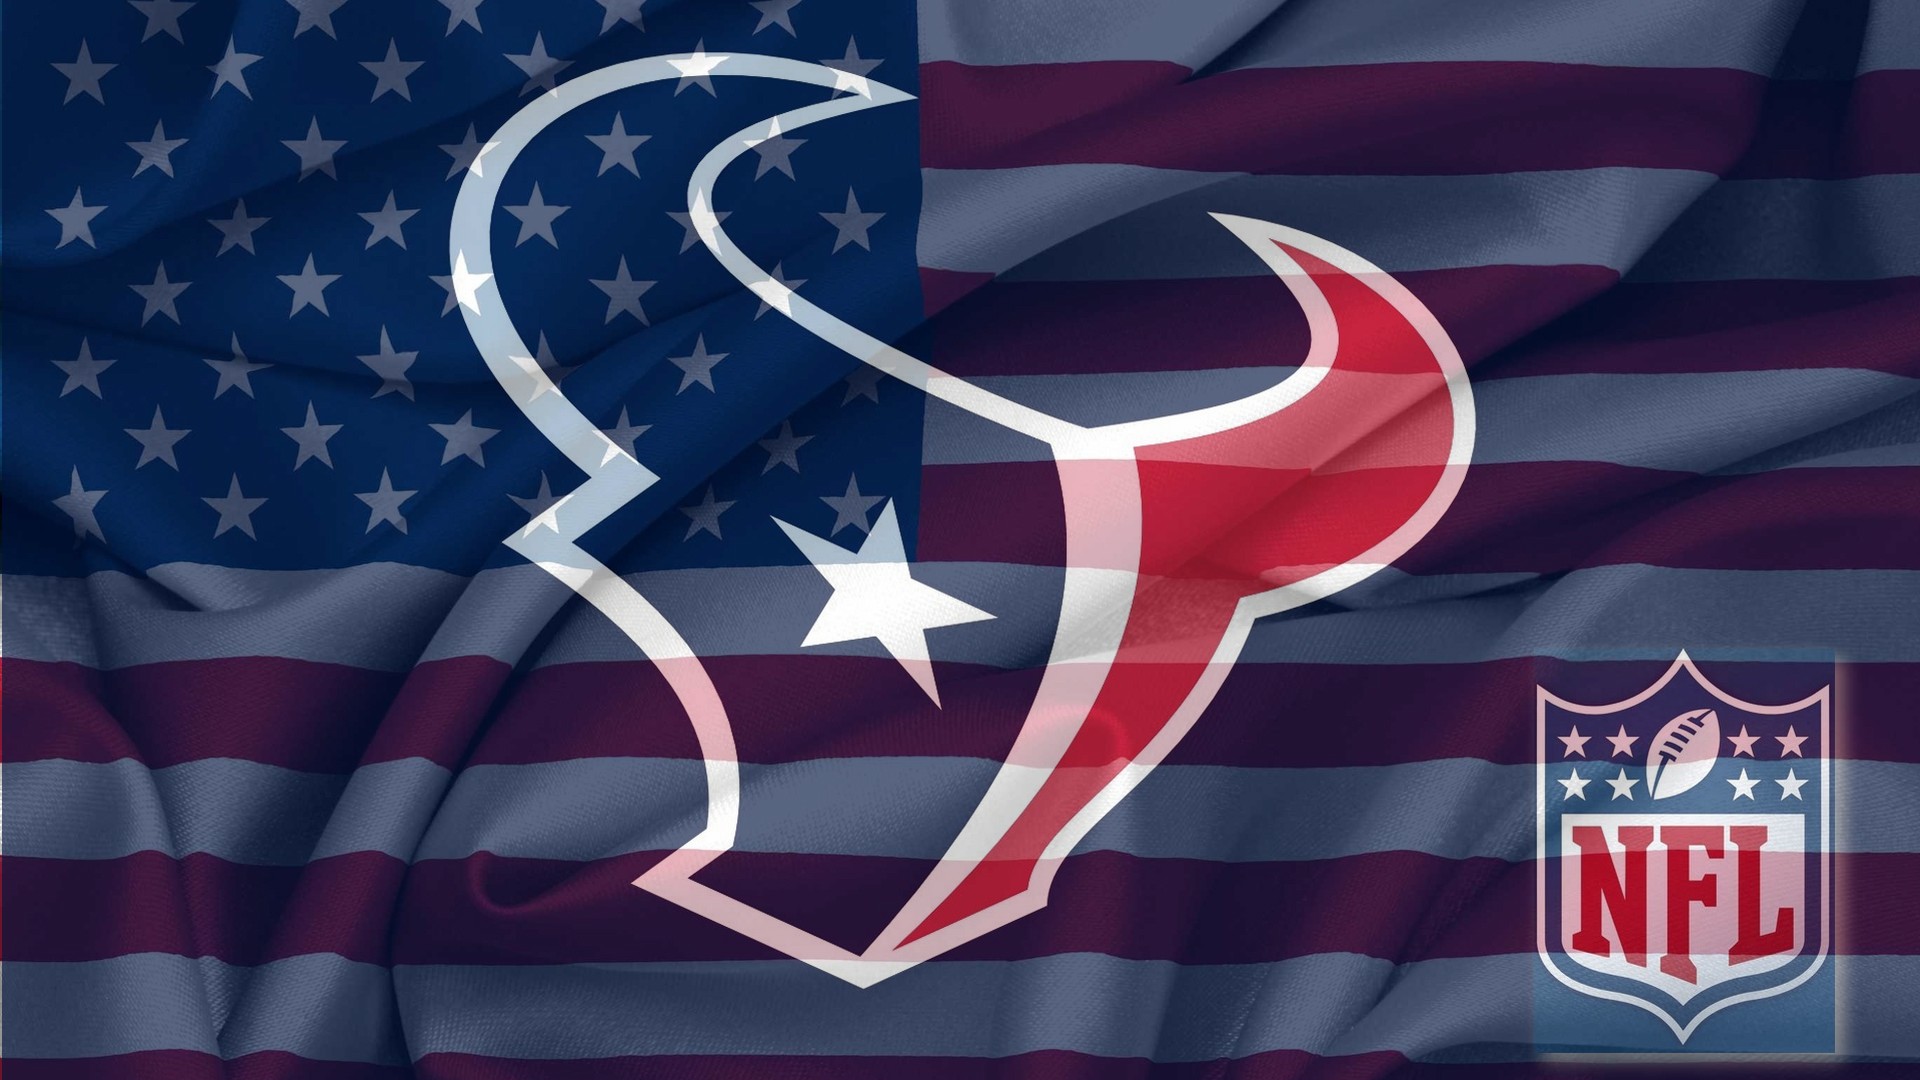 NFL Houston Texans Logo With NFL Logo On USA American Flag ...